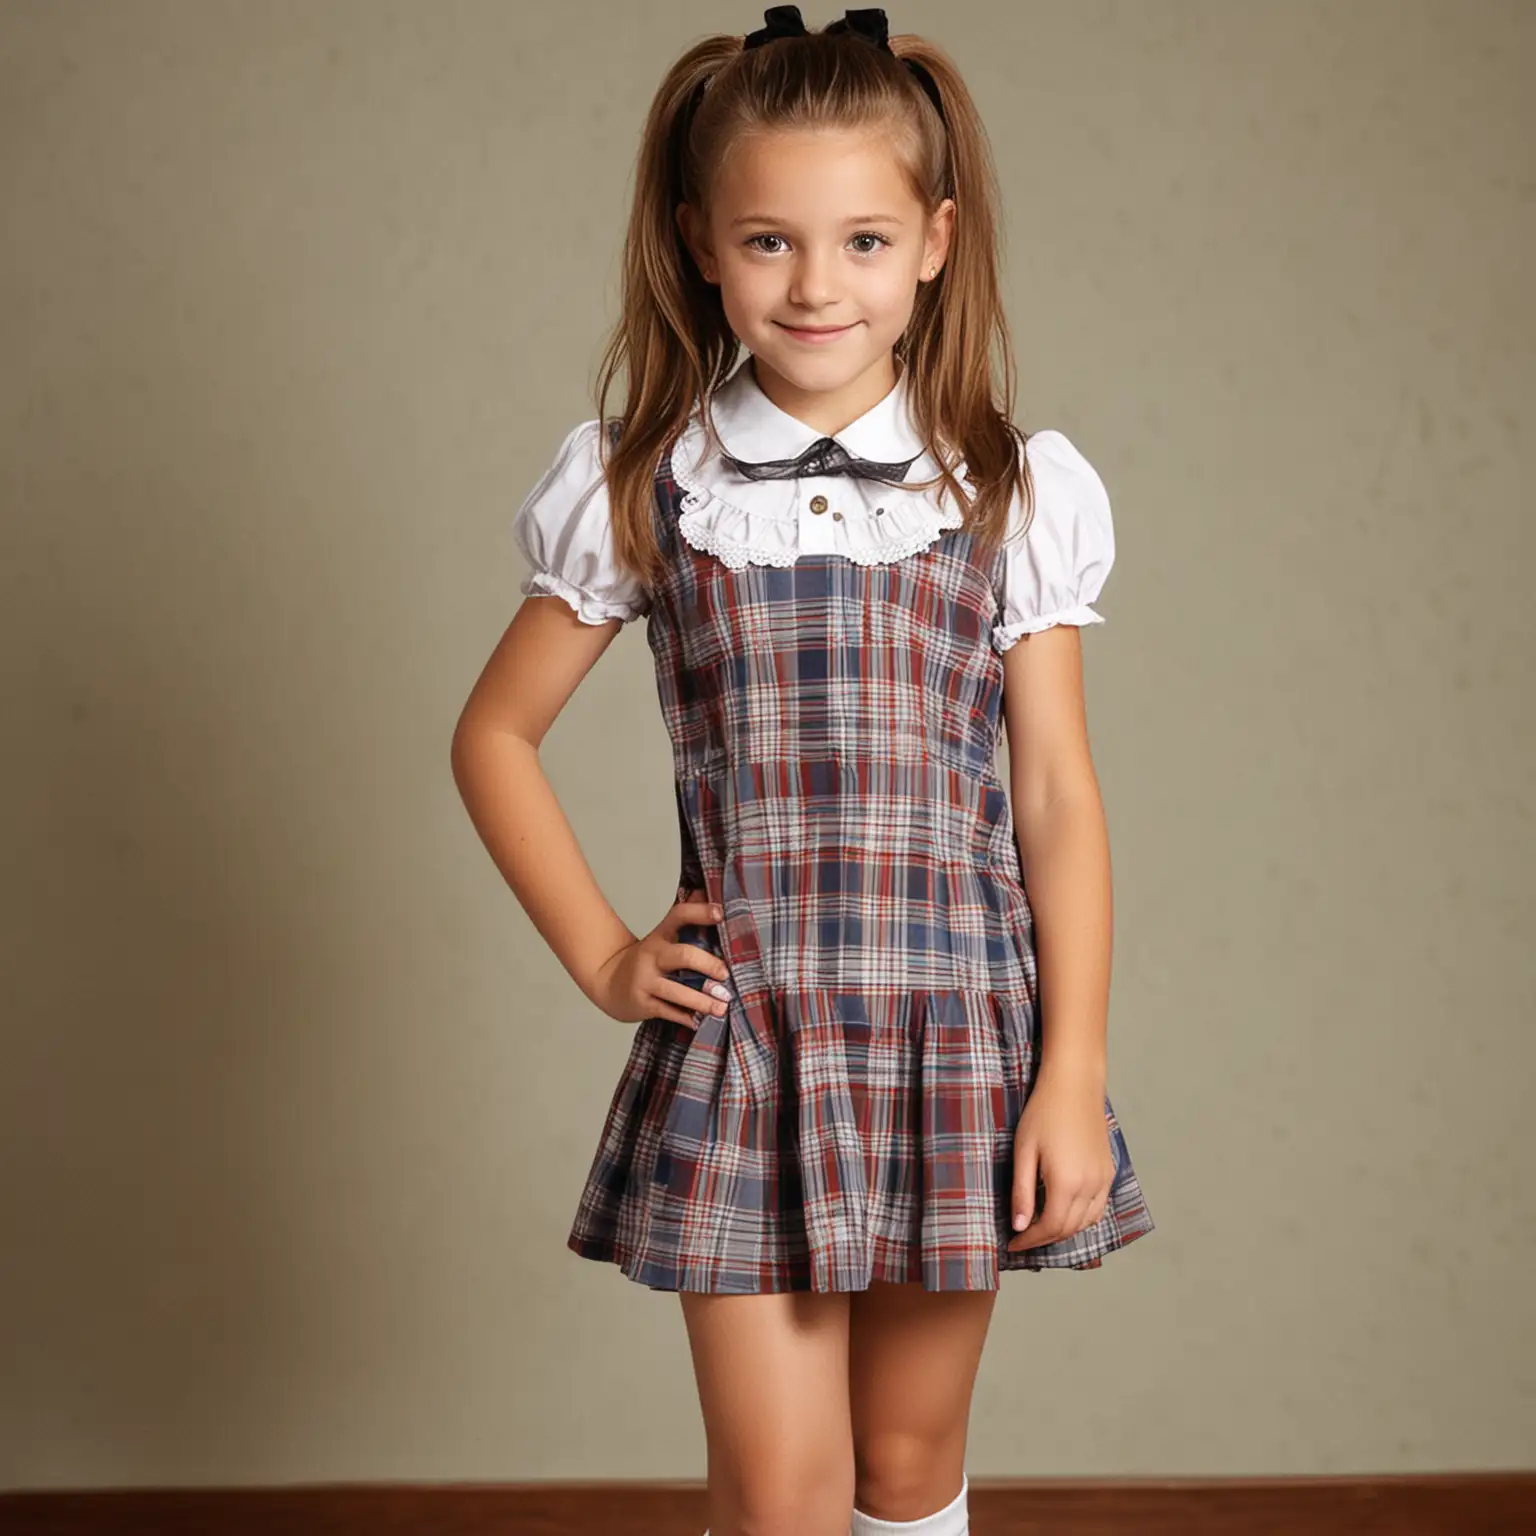 A-Young-Girl-in-Fifth-Grade-School-Uniform-Mini-Dress